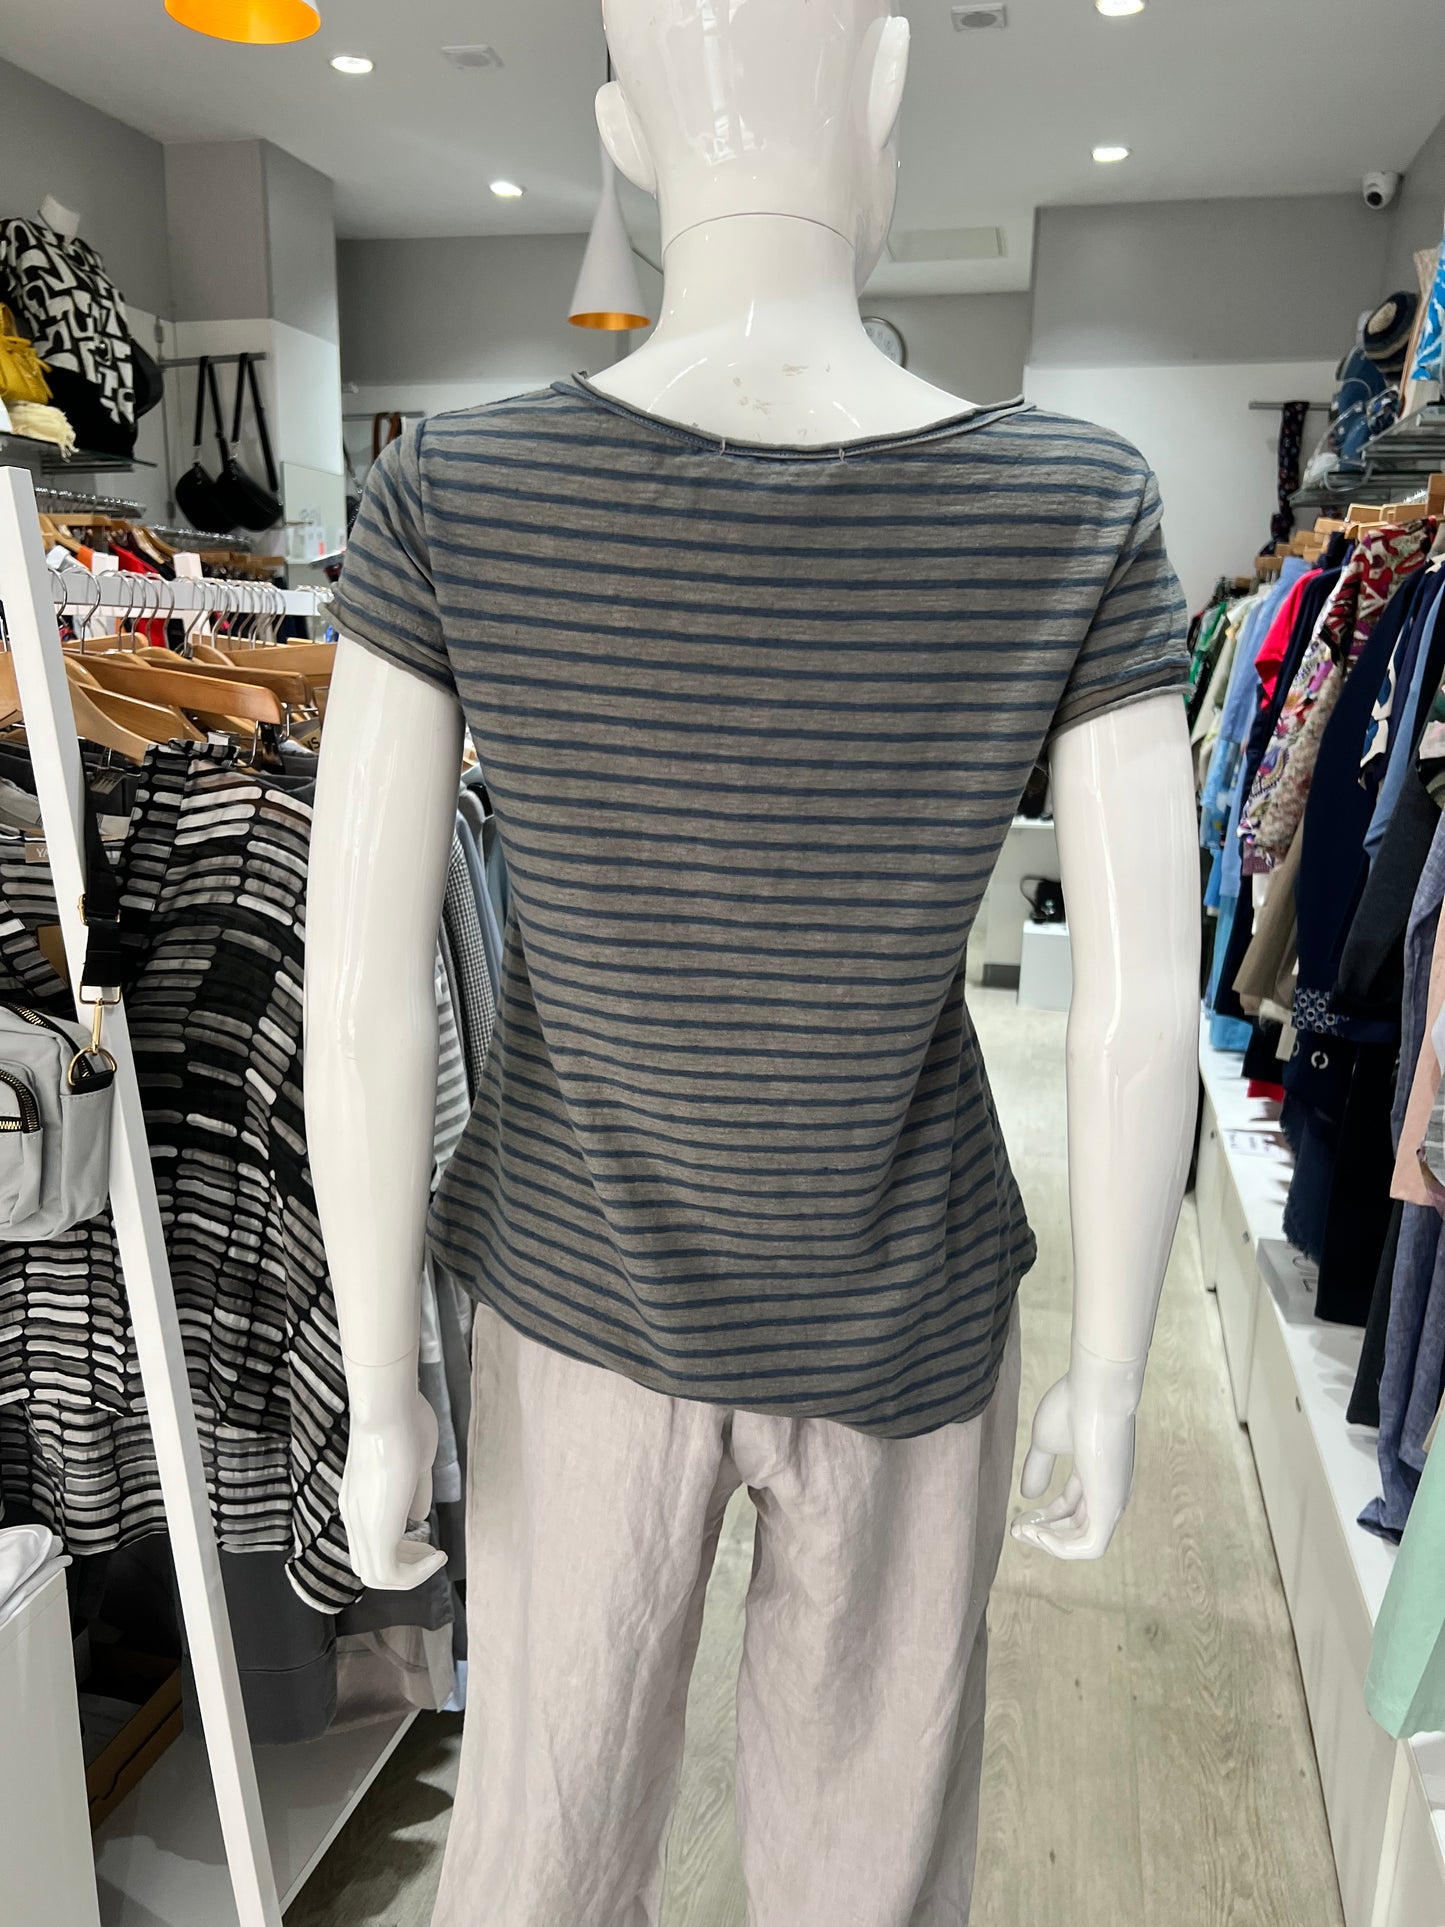 Cut Loose Grey/Blue Stripe T-Shirt